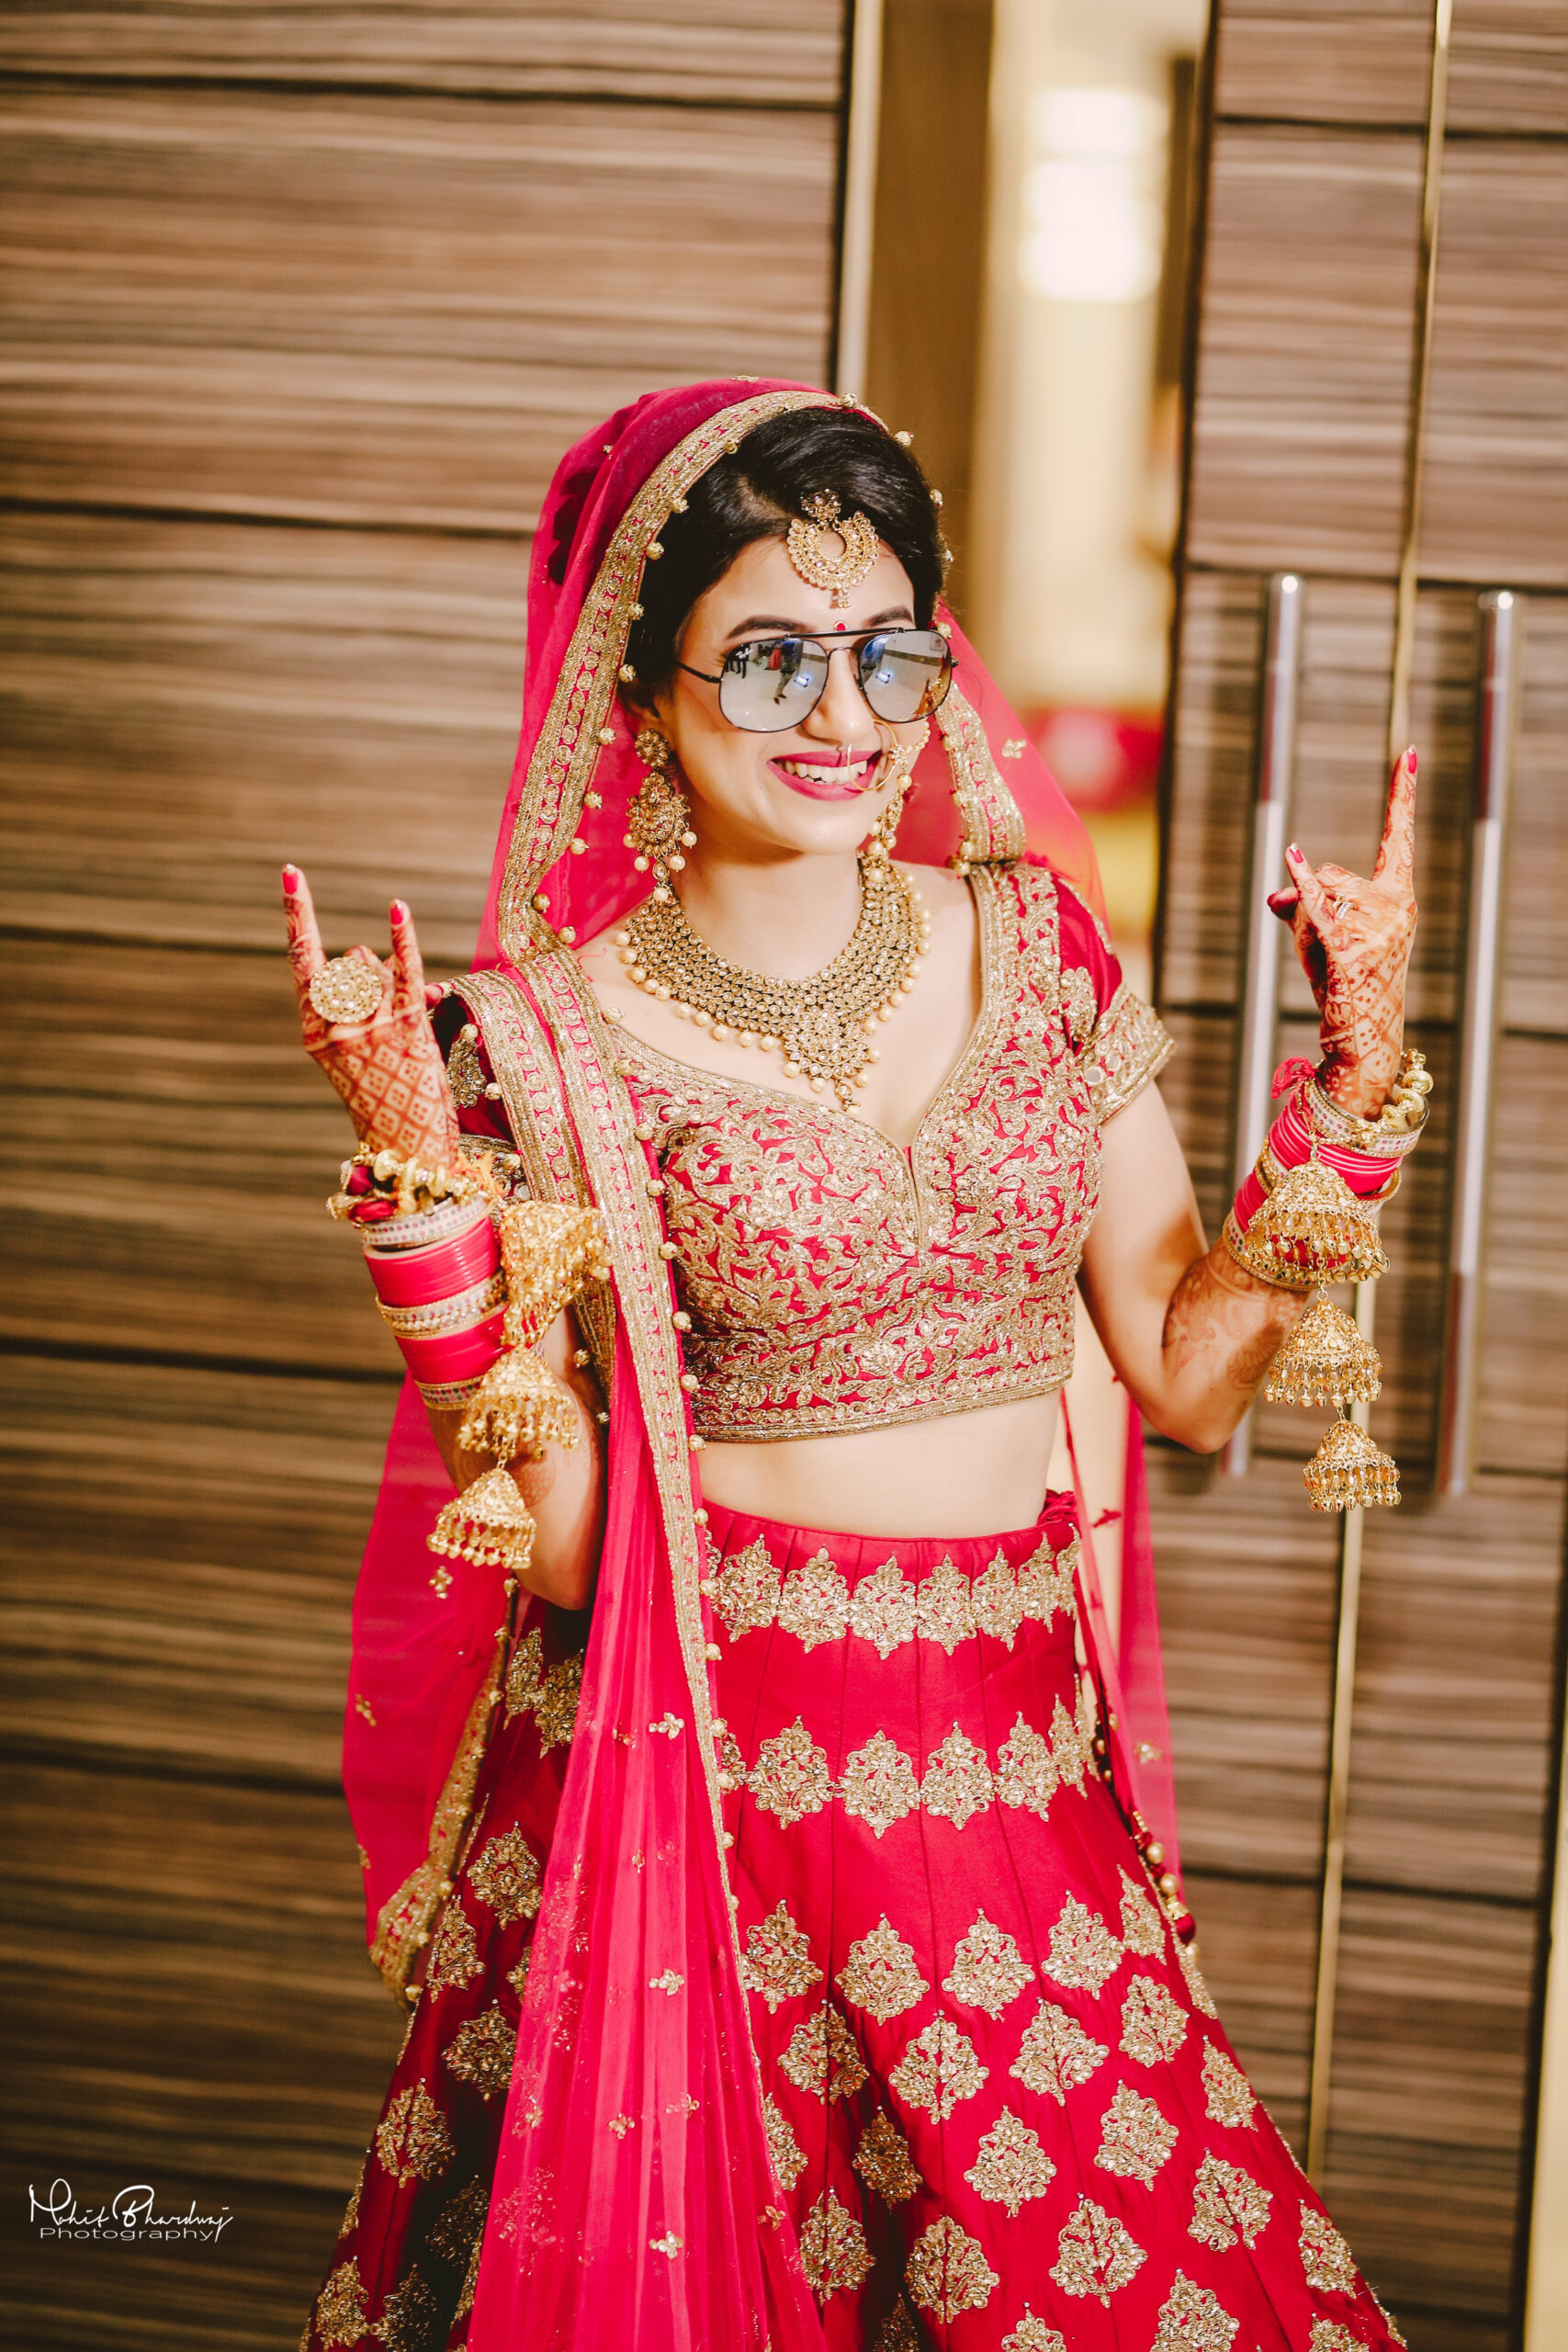 Saurav Kumar on LinkedIn: #weddingphotography #weddingphotographer  #weddingday #candidphotography…